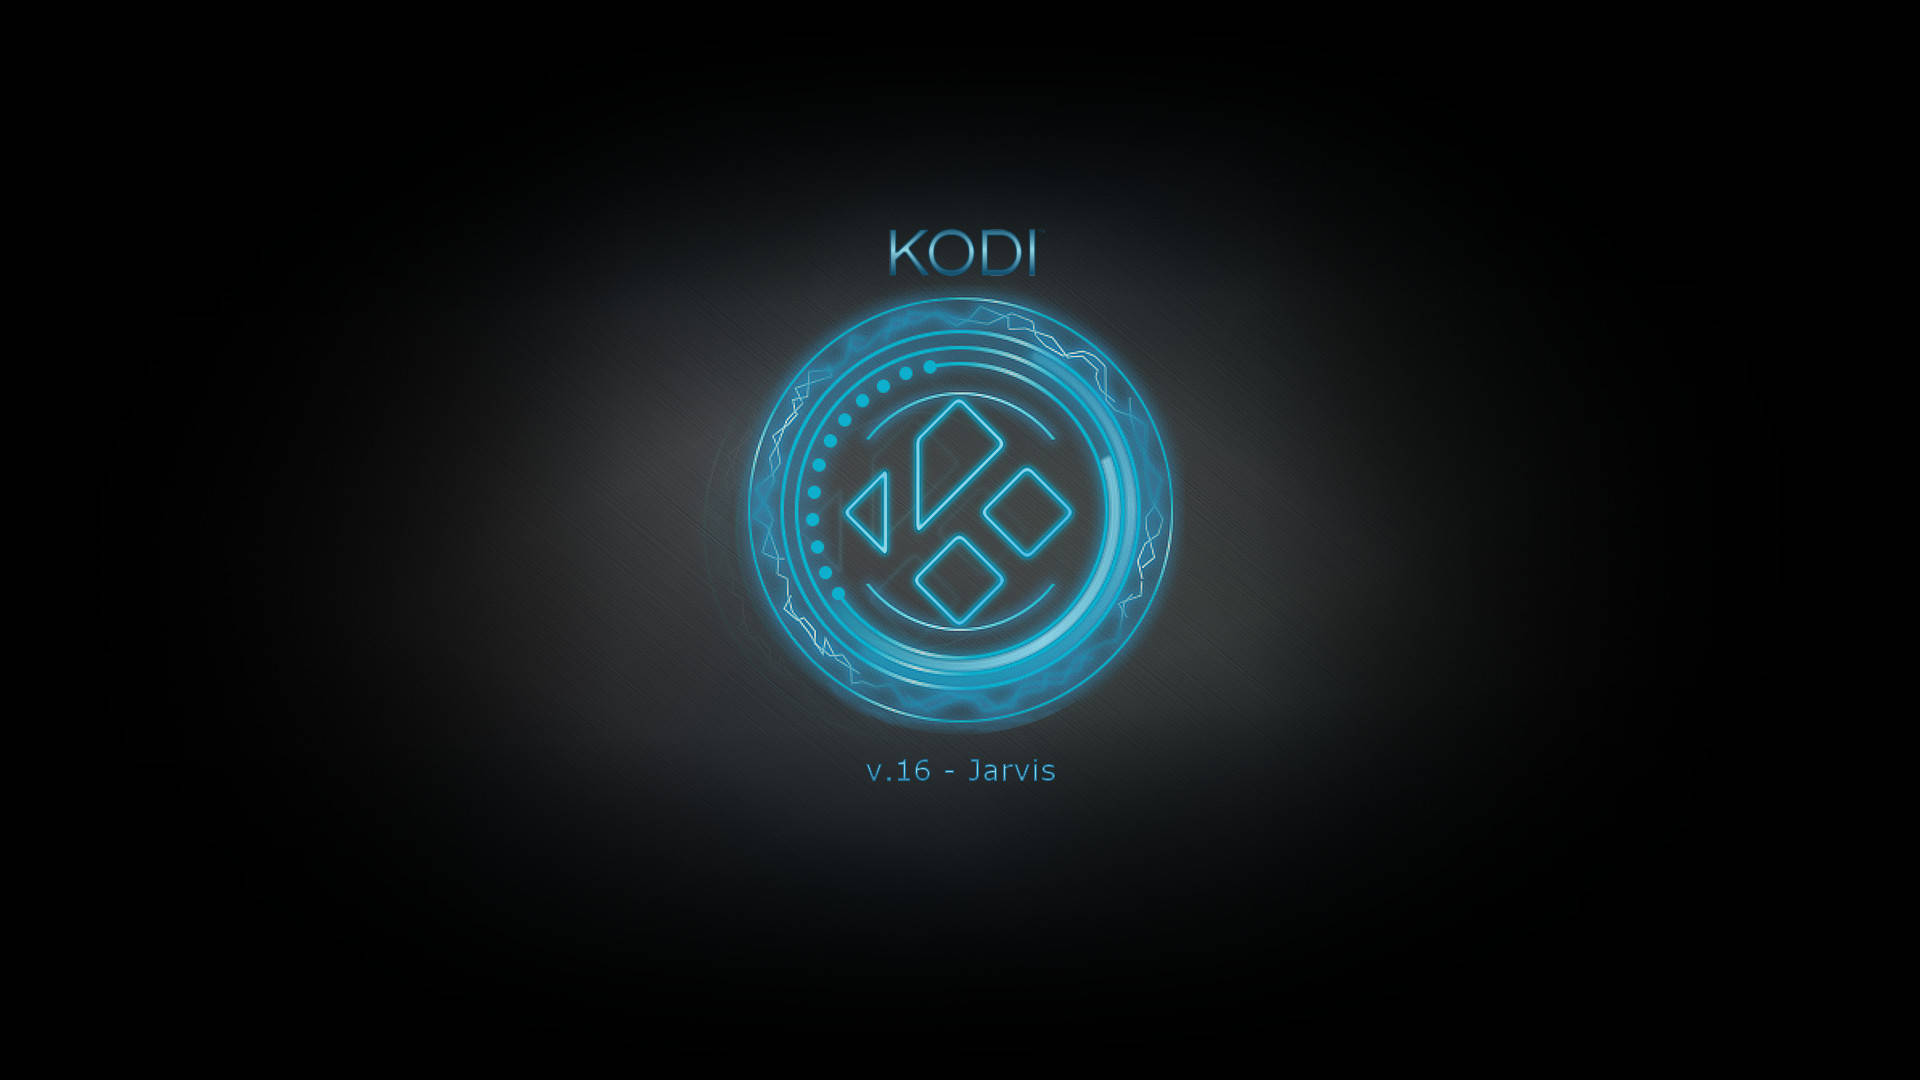 Blue Kodi Logo With Dark Background Wallpaper